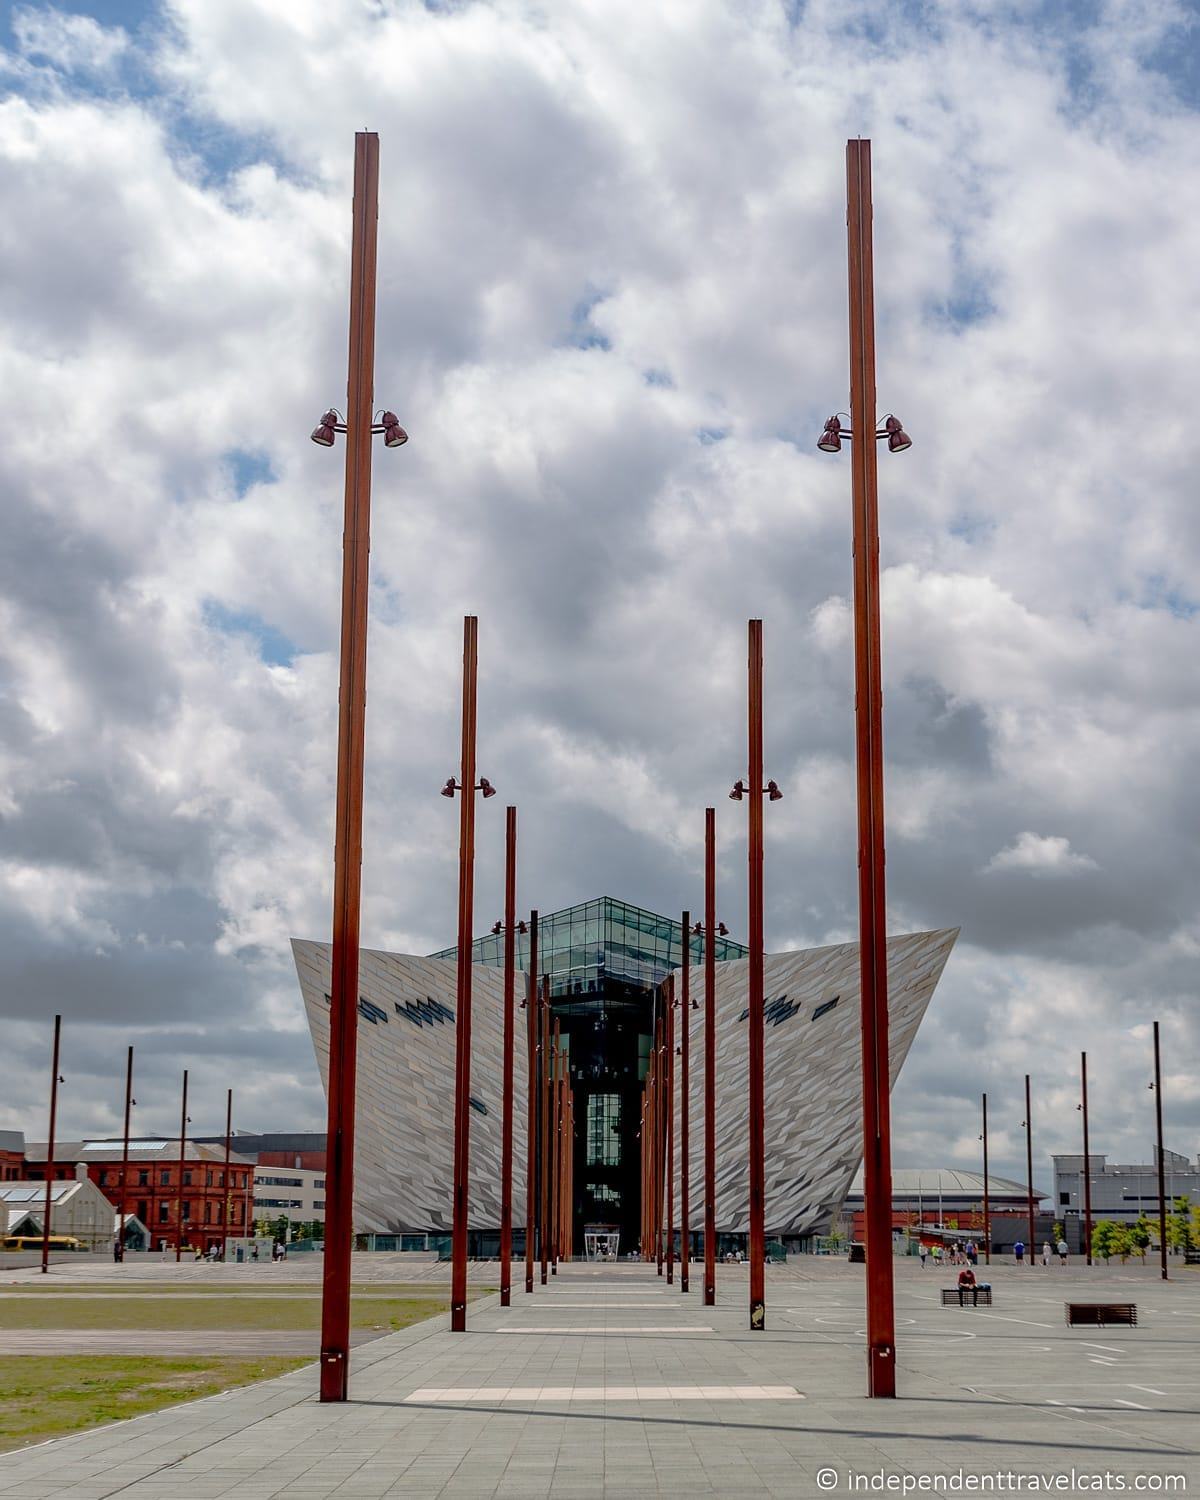 Titanic Belfast museum and Titanic slipway Olympic slipway Belfast Titanic sites maritime attractions